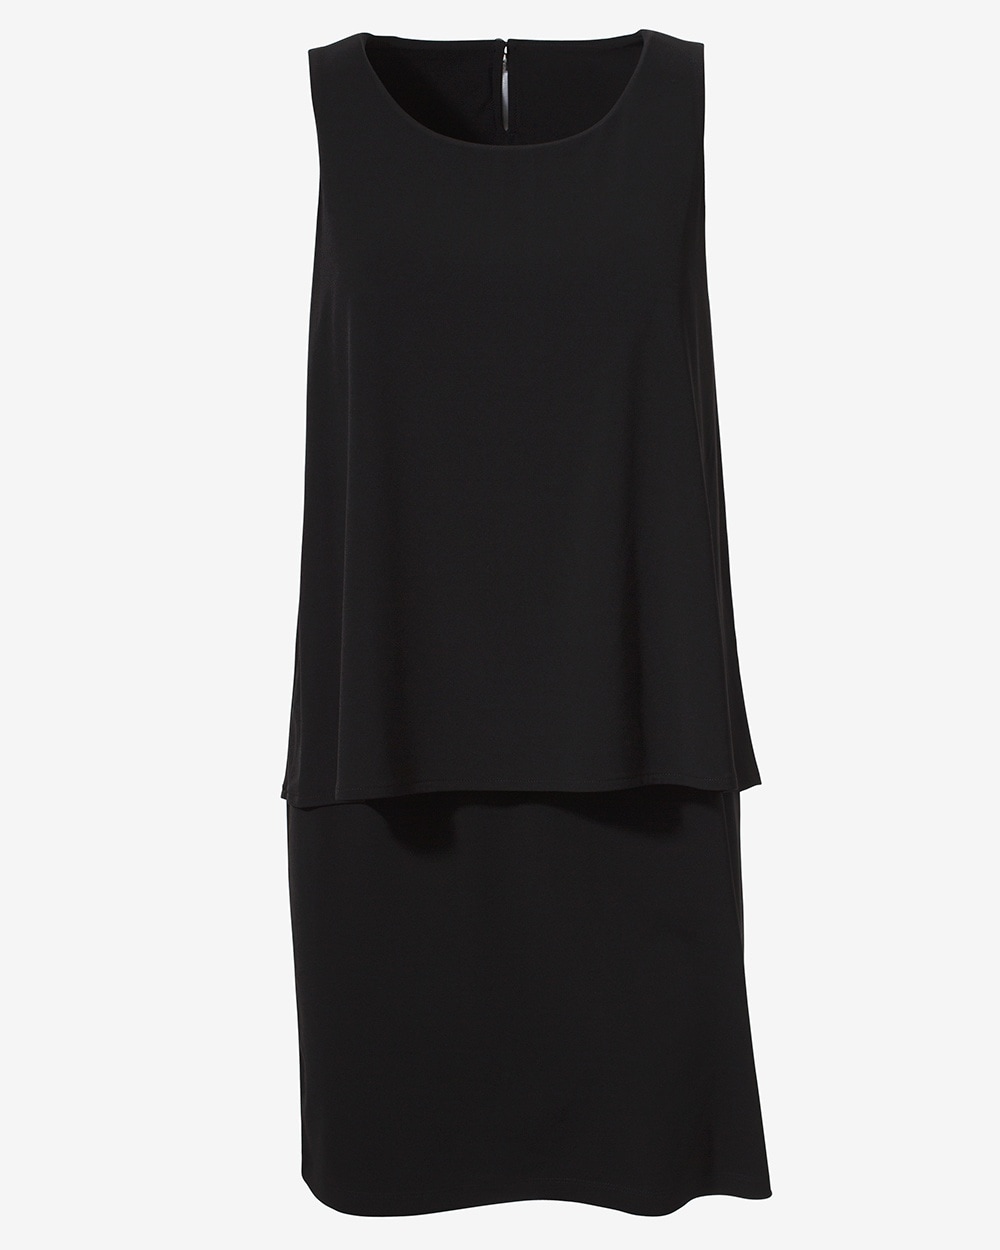 Black Layered Knee-Length Dress